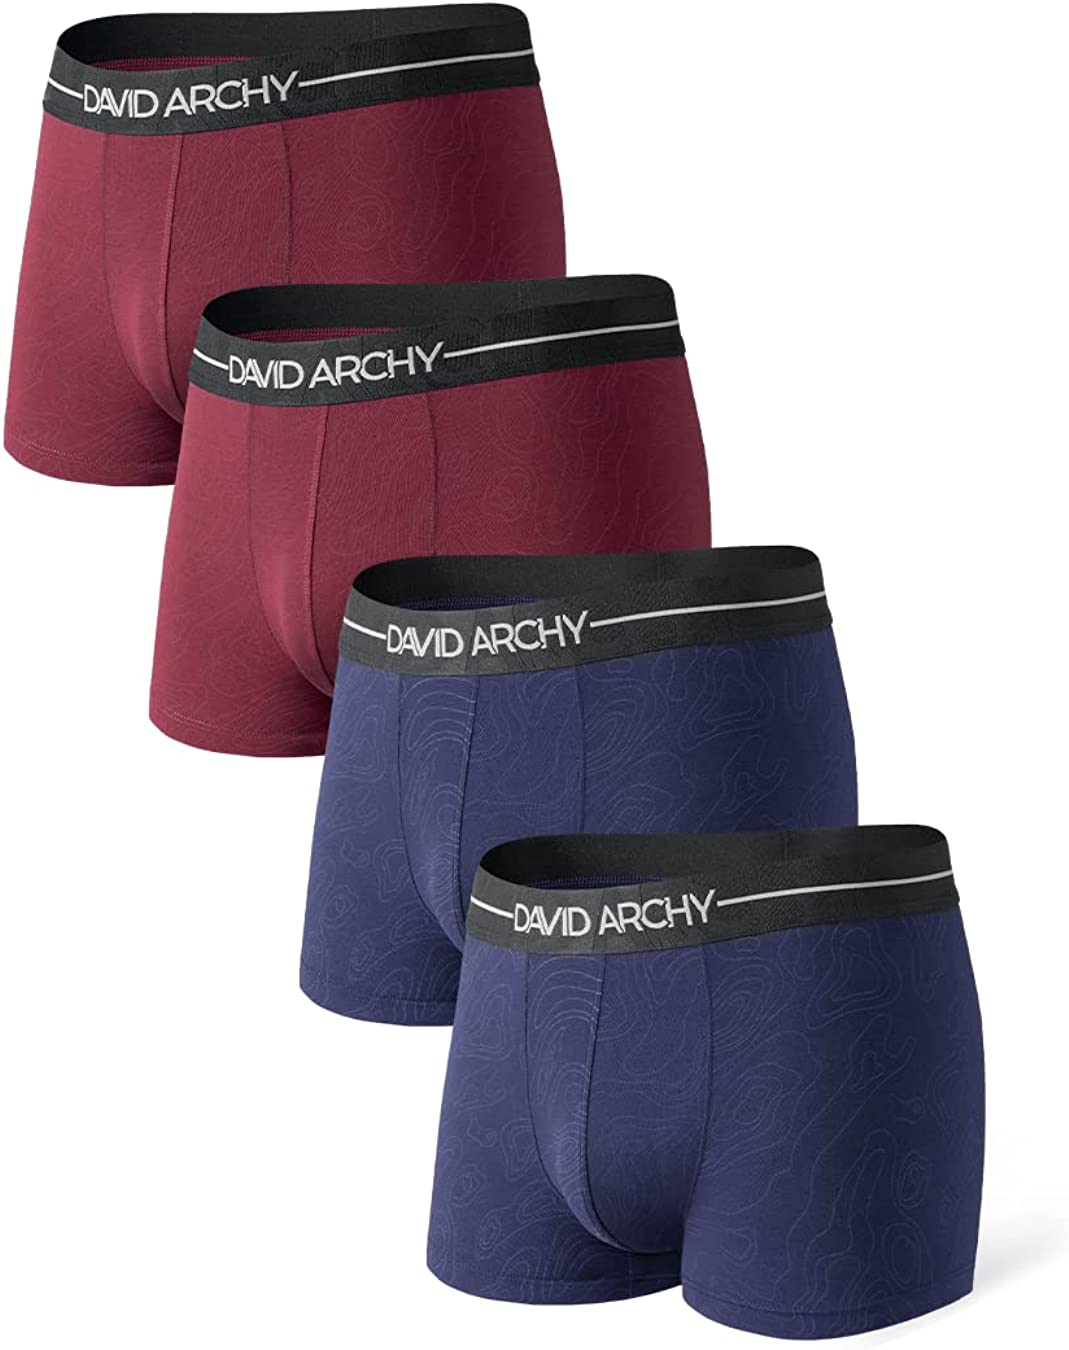 DAVID ARCHY Men's Underwear Ultra Soft Comfy Breathable Trunks Med 